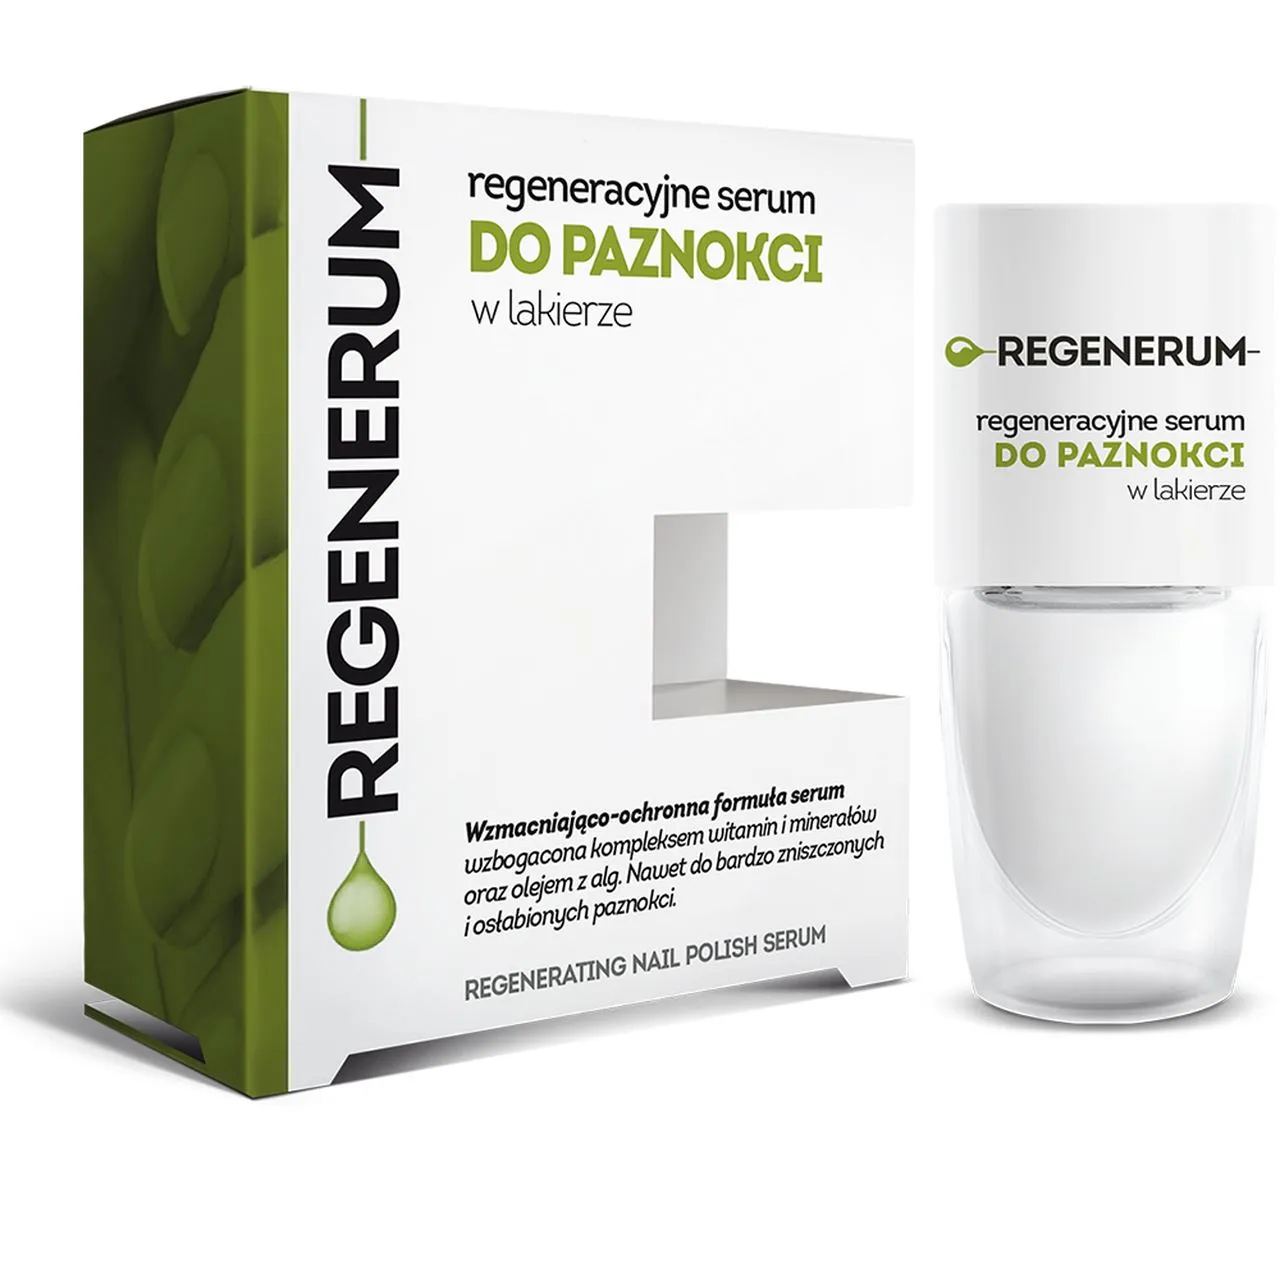 Regenerum, regeneracyjne serum do paznokci, lakier, 8 ml